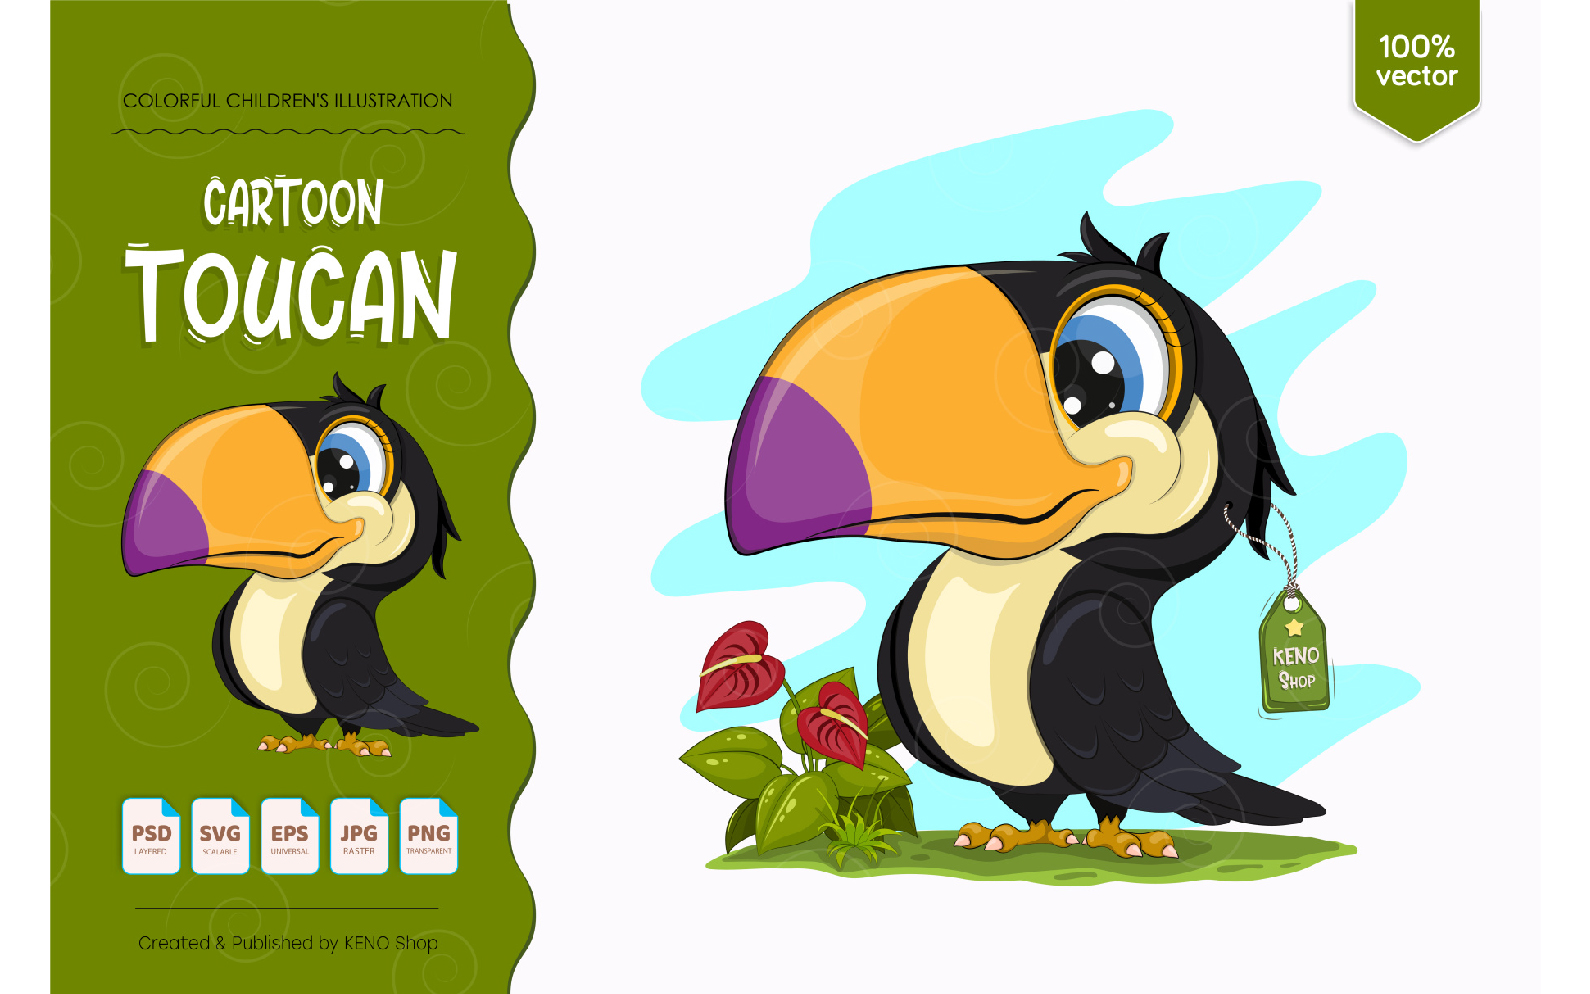 Cute Cartoon Toucan - Vector Image